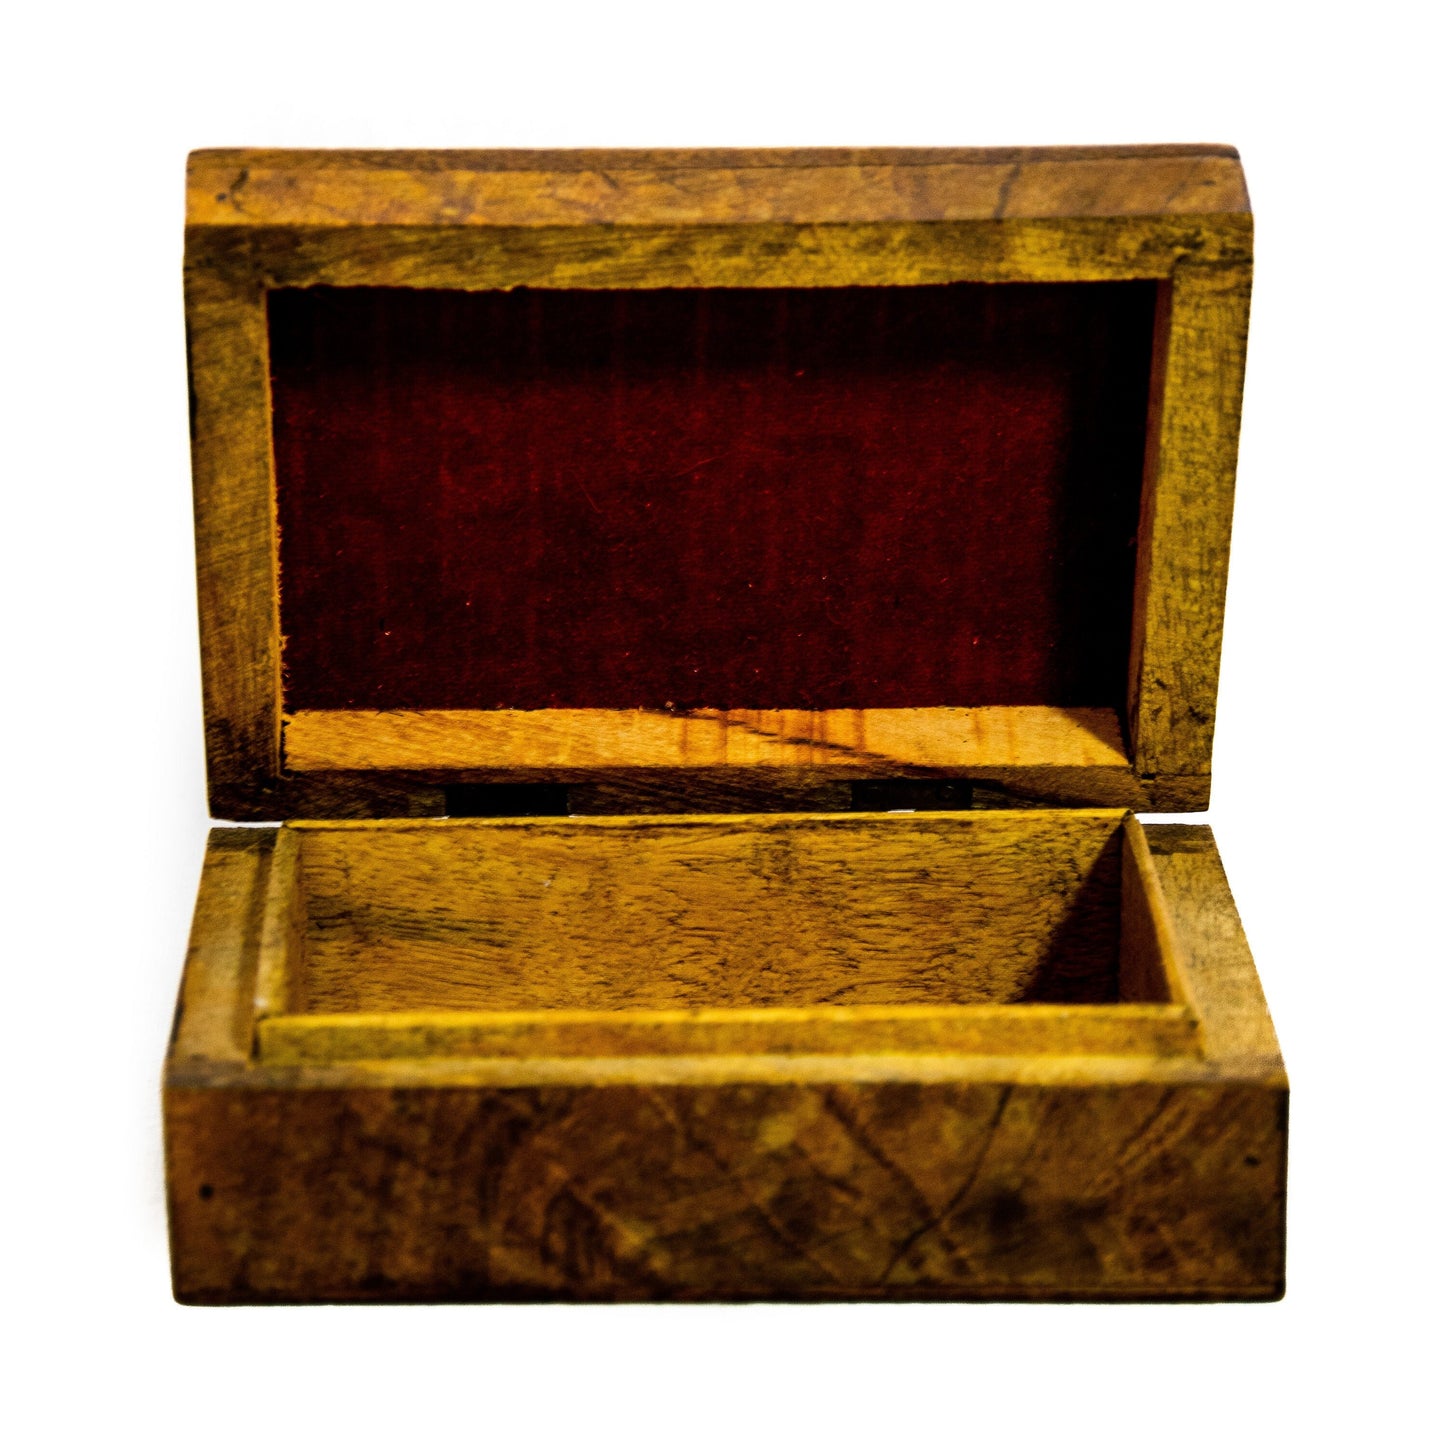 Handmade Religious carved wooden Prayer box with Christian Cross, Greek Vintage Decorative Jewelry Keepsake box 15x10x6cm, baptism gift TheHolyArt